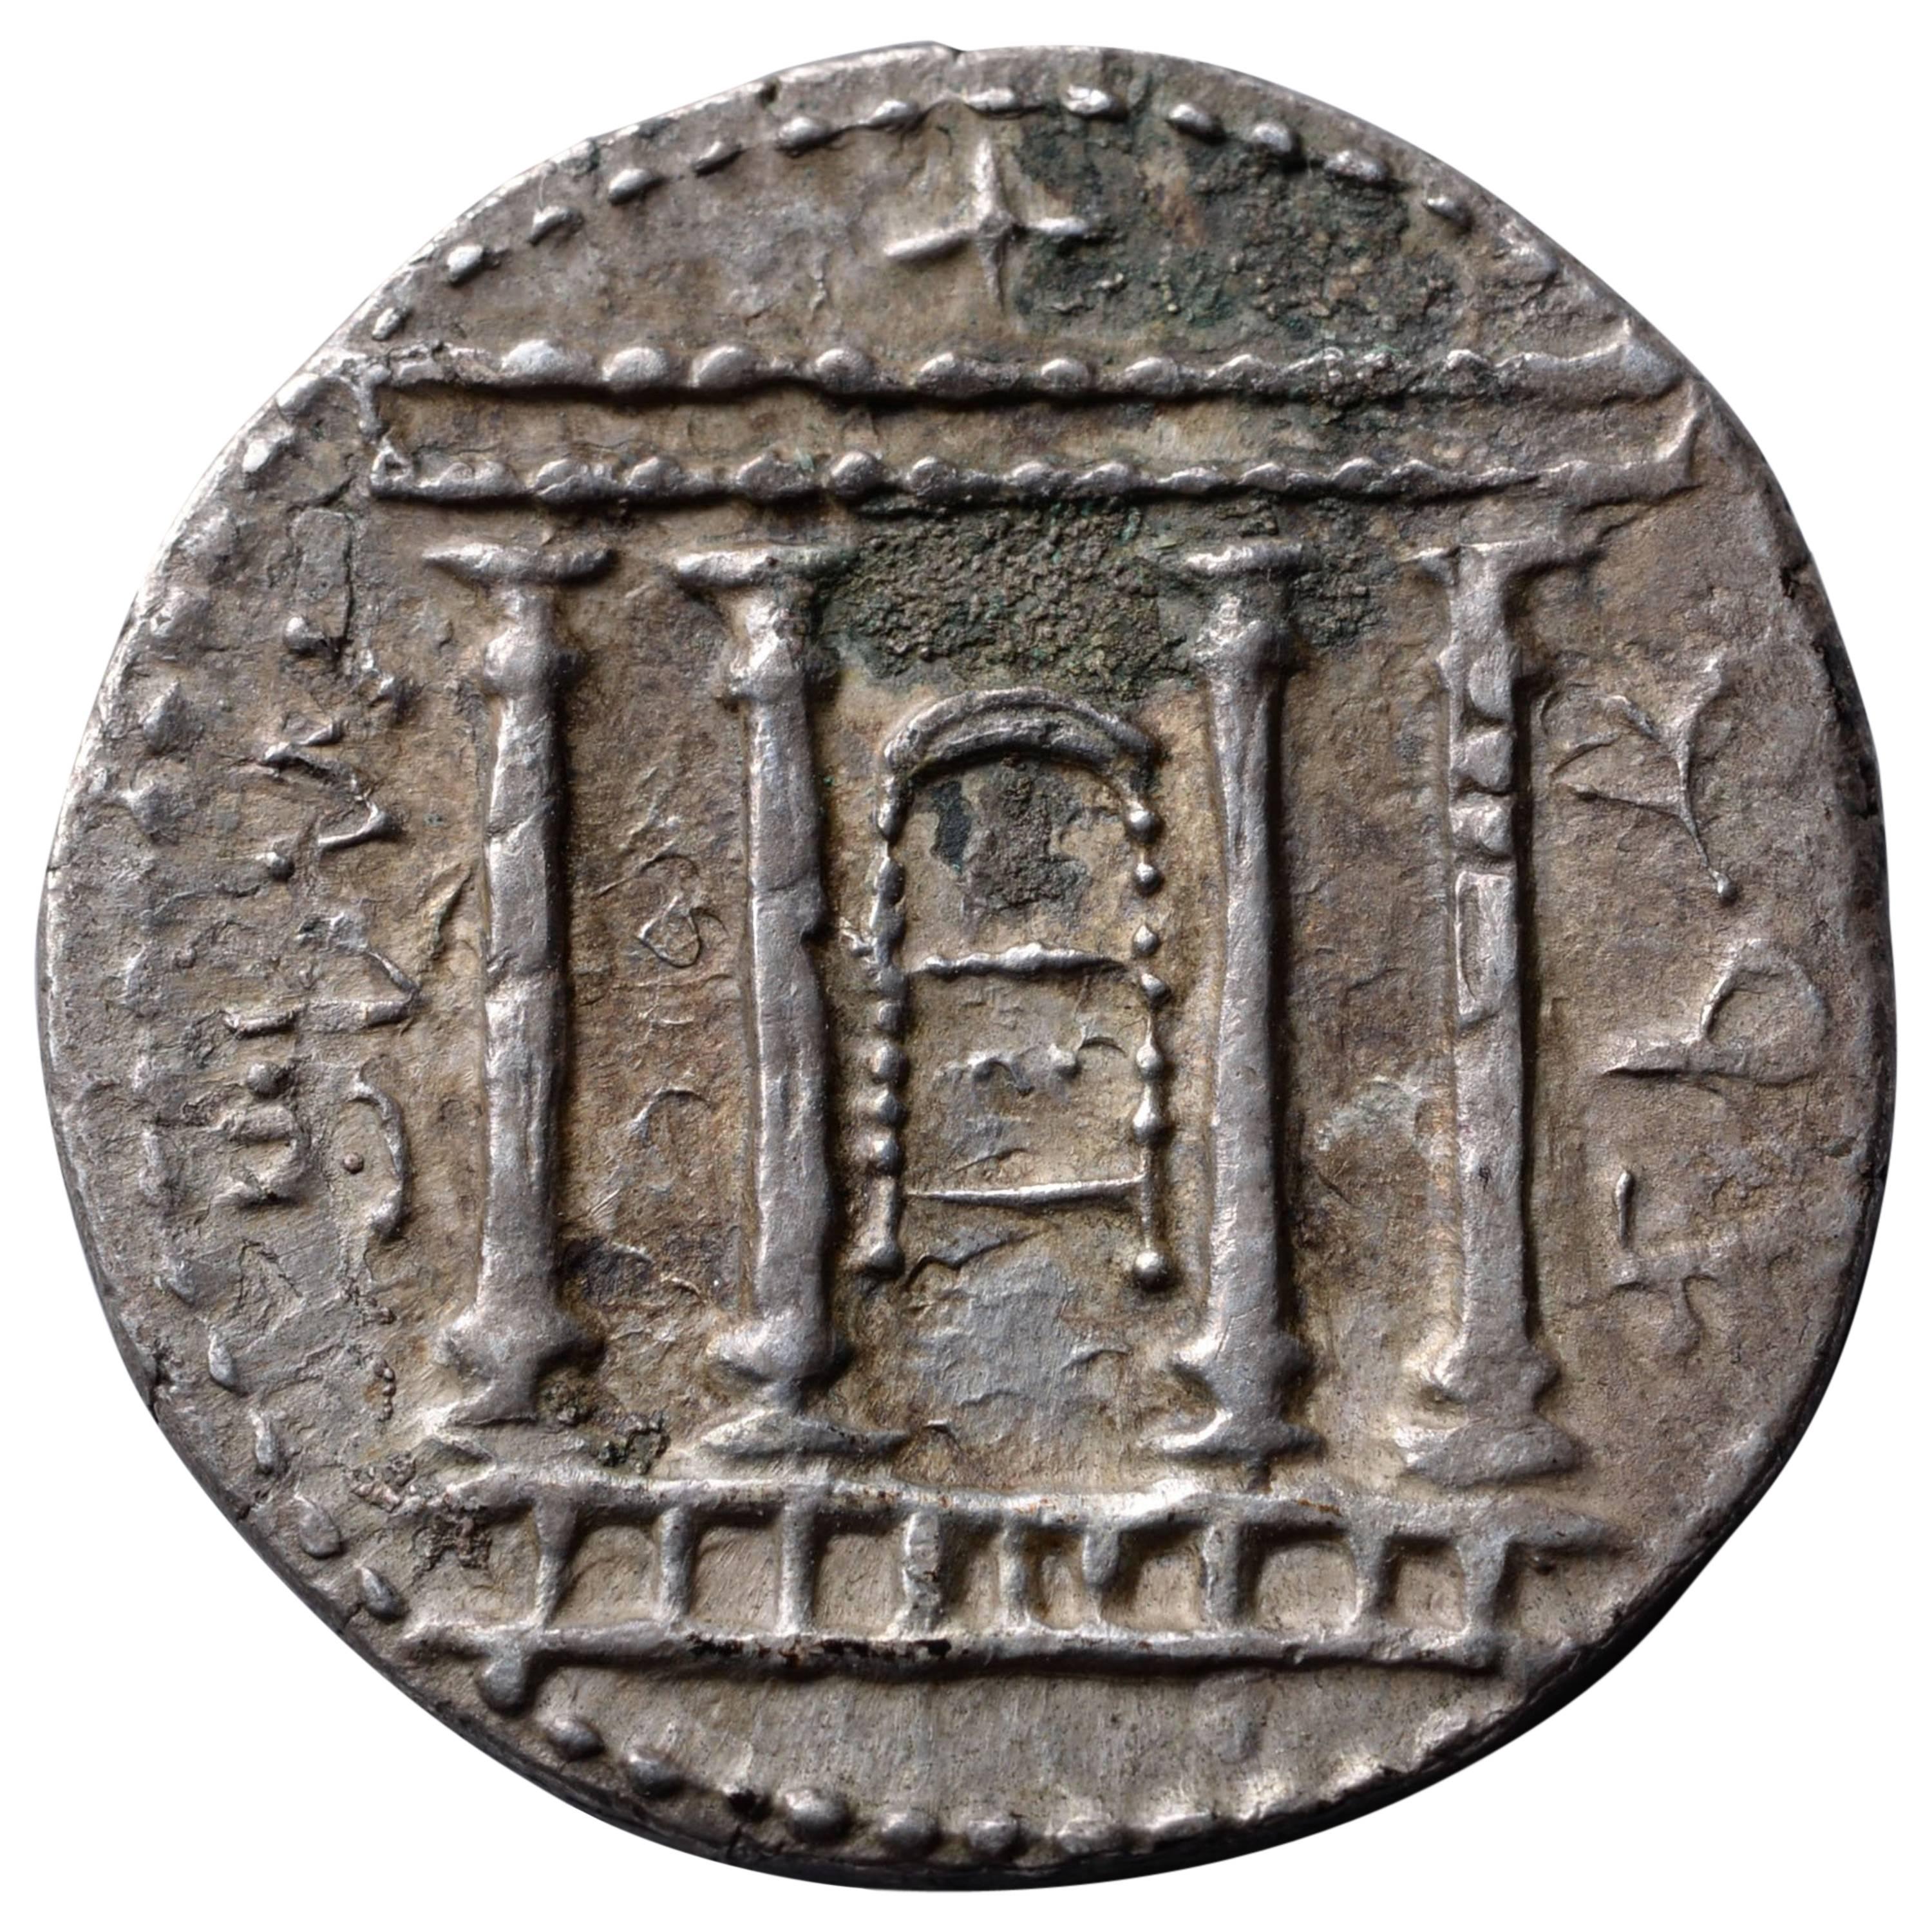 Jewish War Silver Sela Coin from Year 2 of the Bar Kochba Revolt, 133 AD